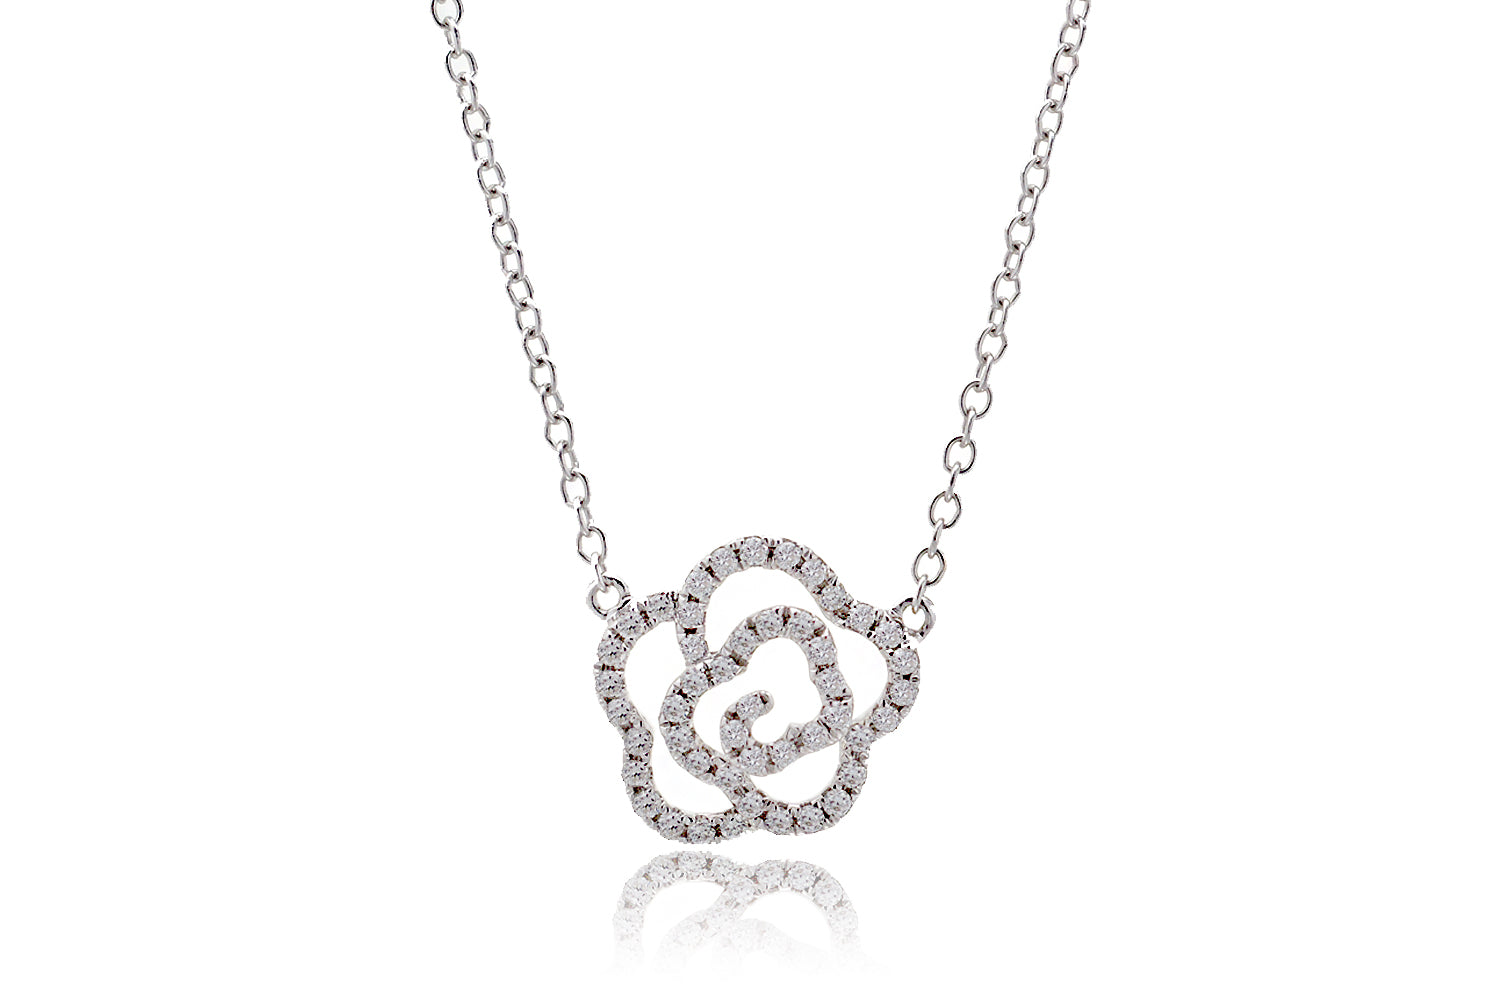 The Carnation Diamond Necklace